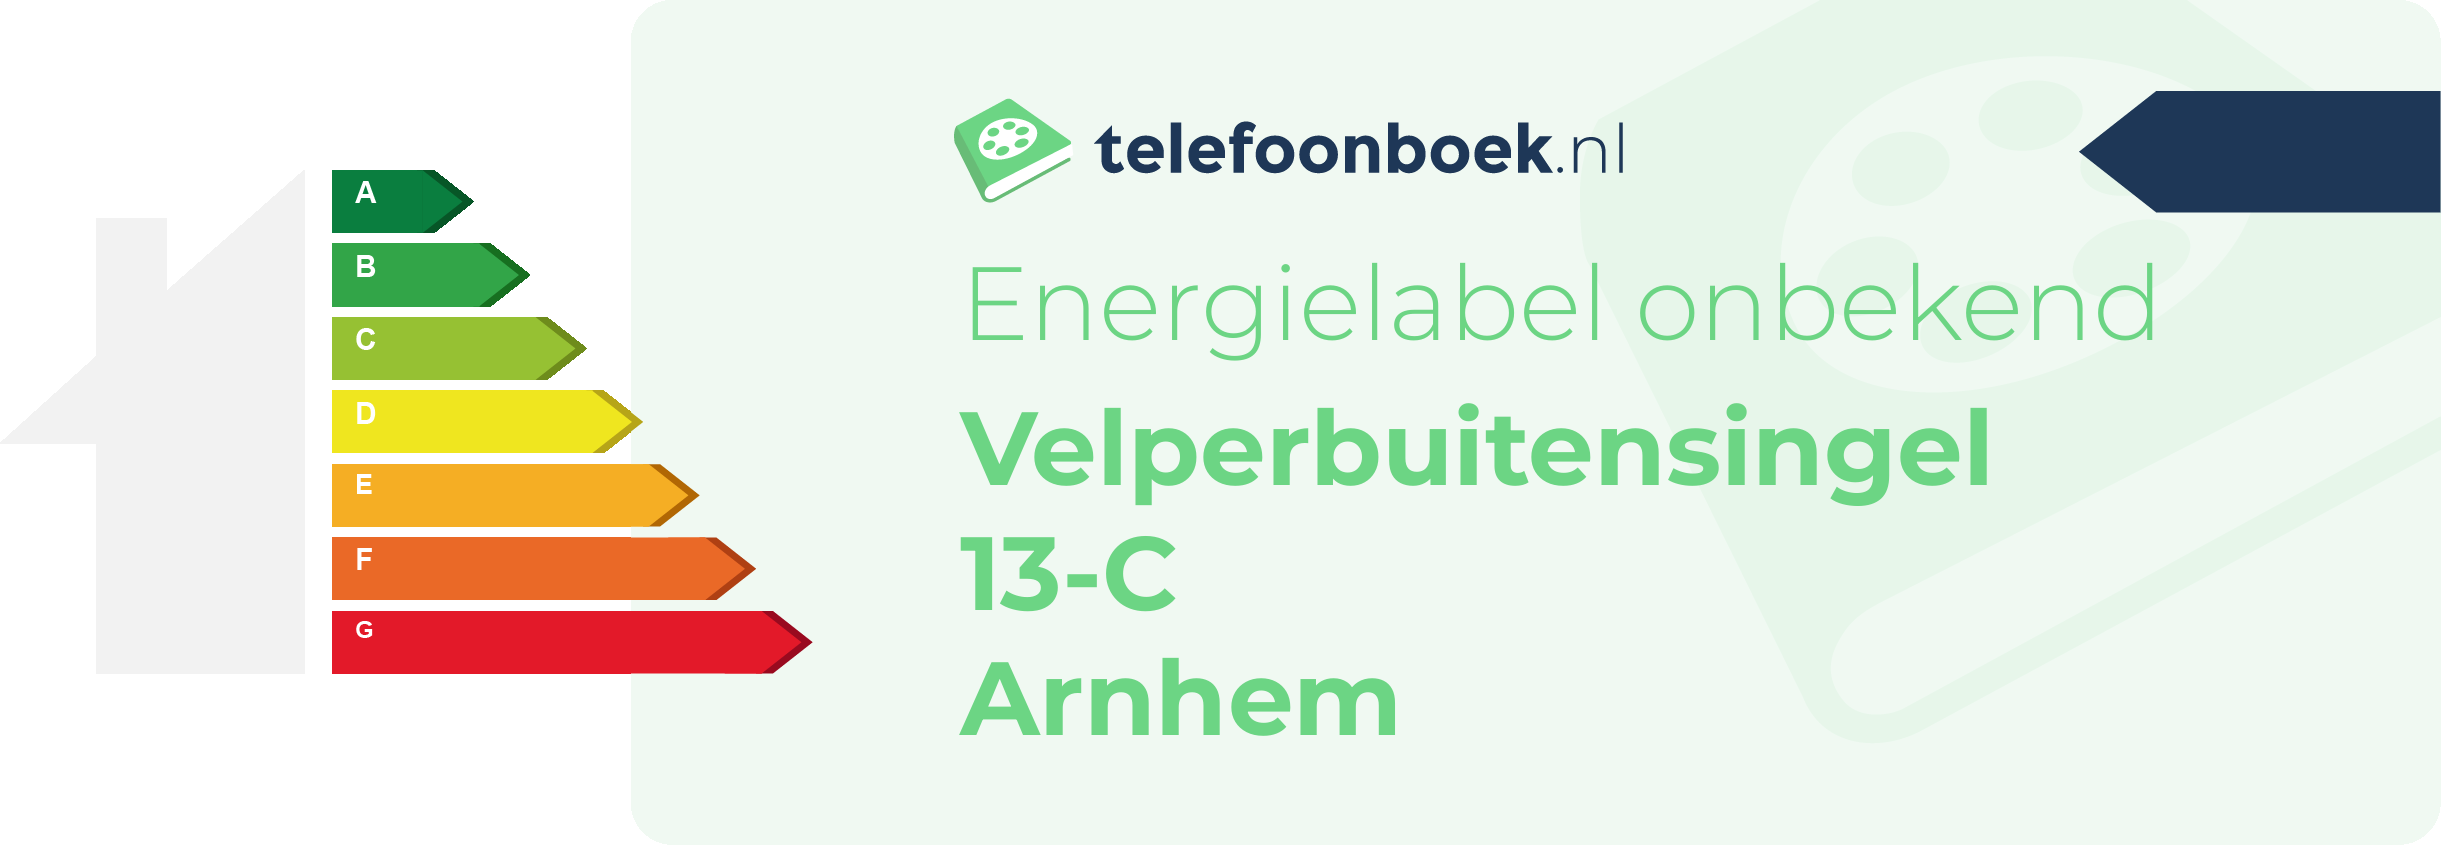 Energielabel Velperbuitensingel 13-C Arnhem